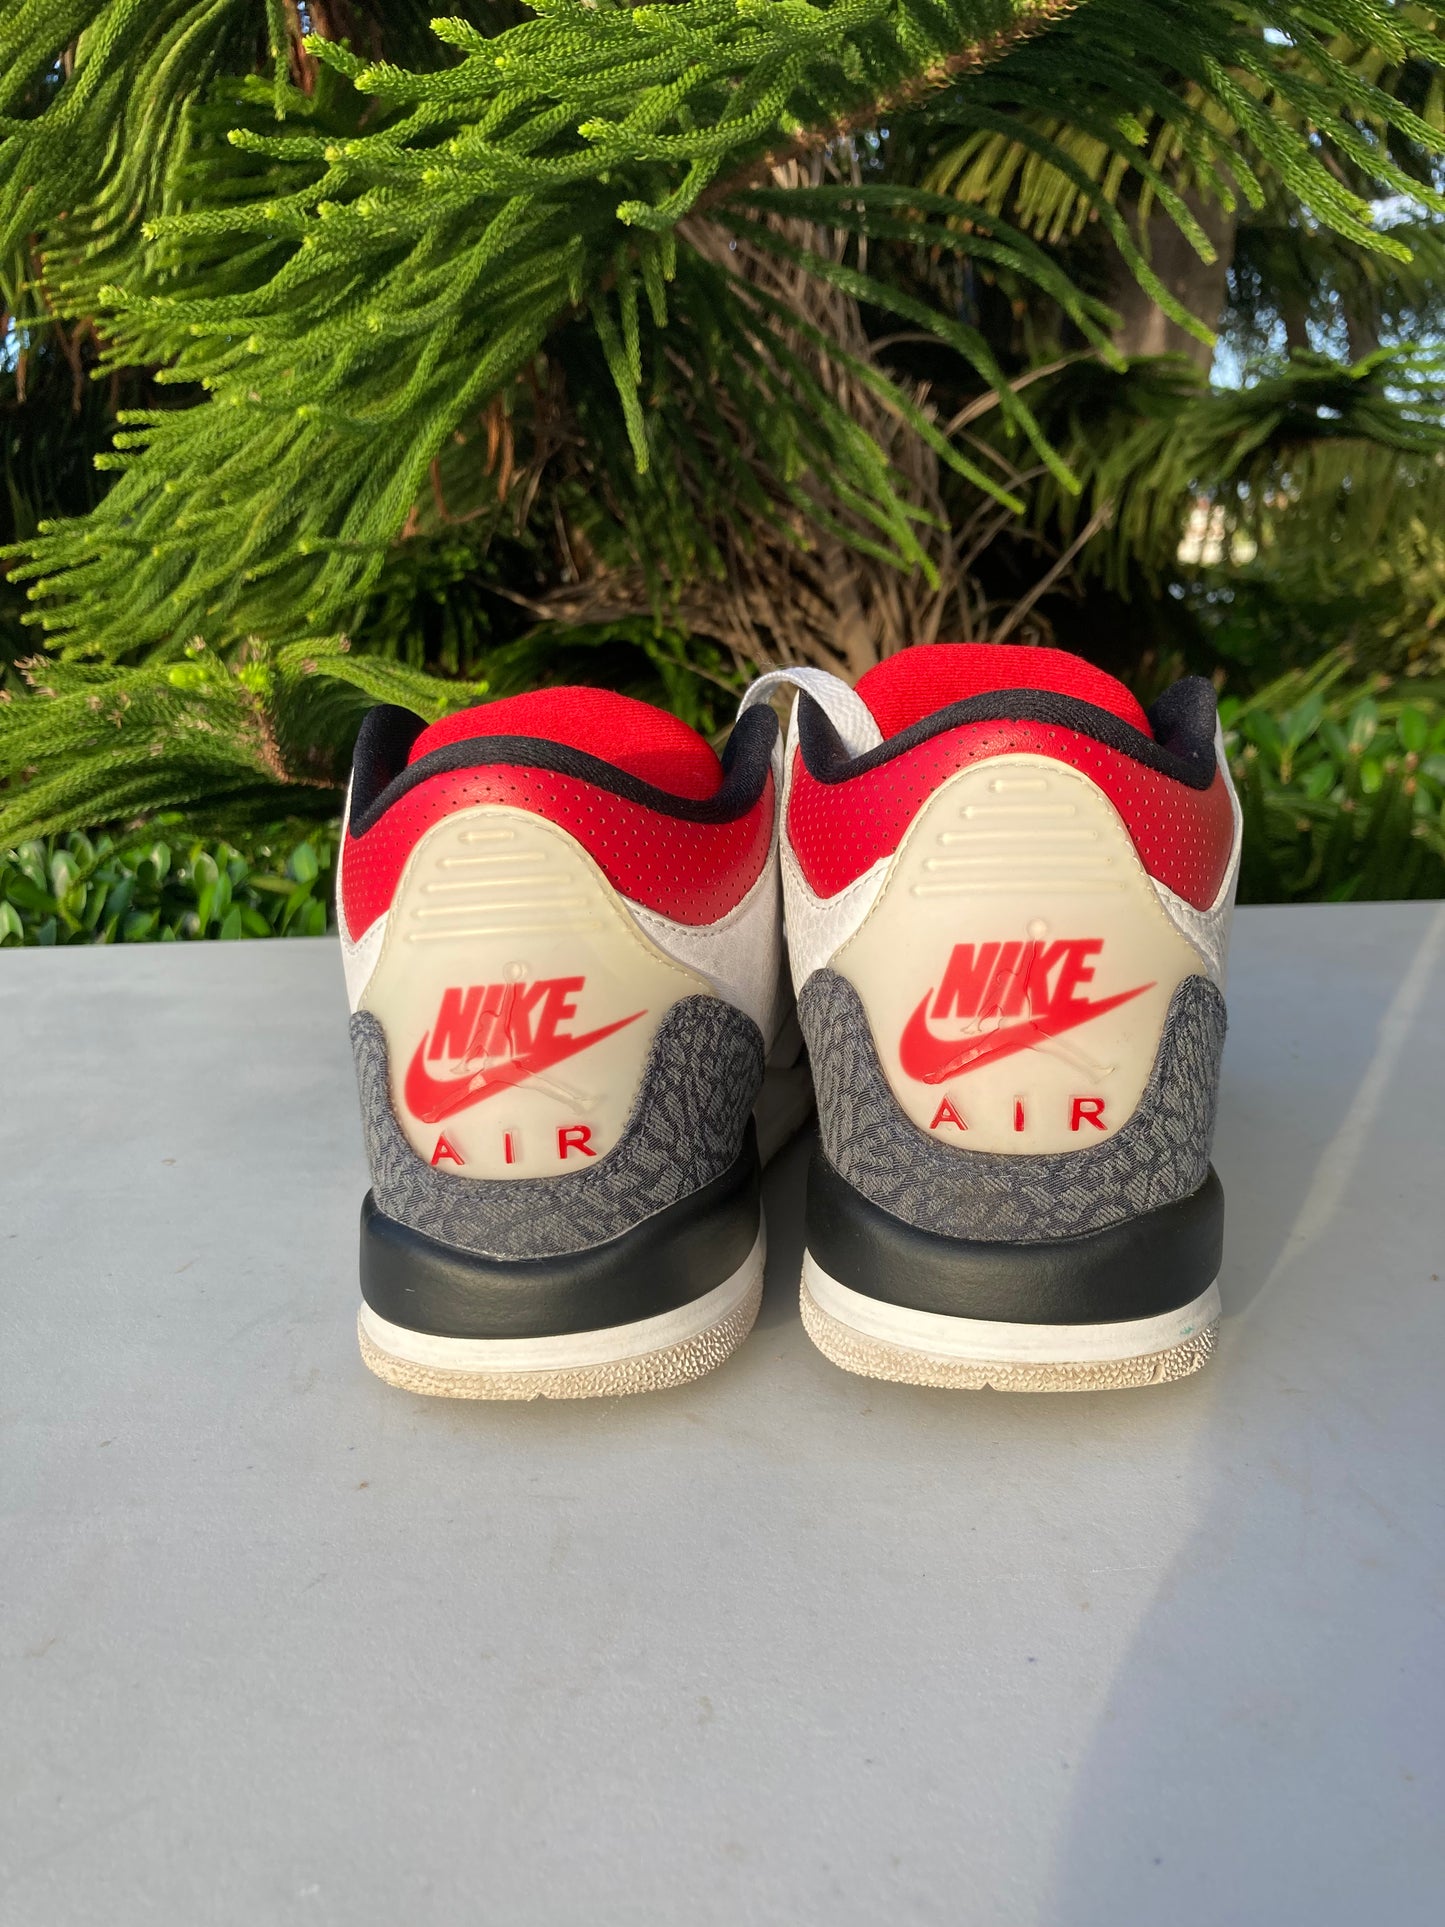 Nike Air Jordan 3 Retro Denim Basketball Shoes Youth (Boys)